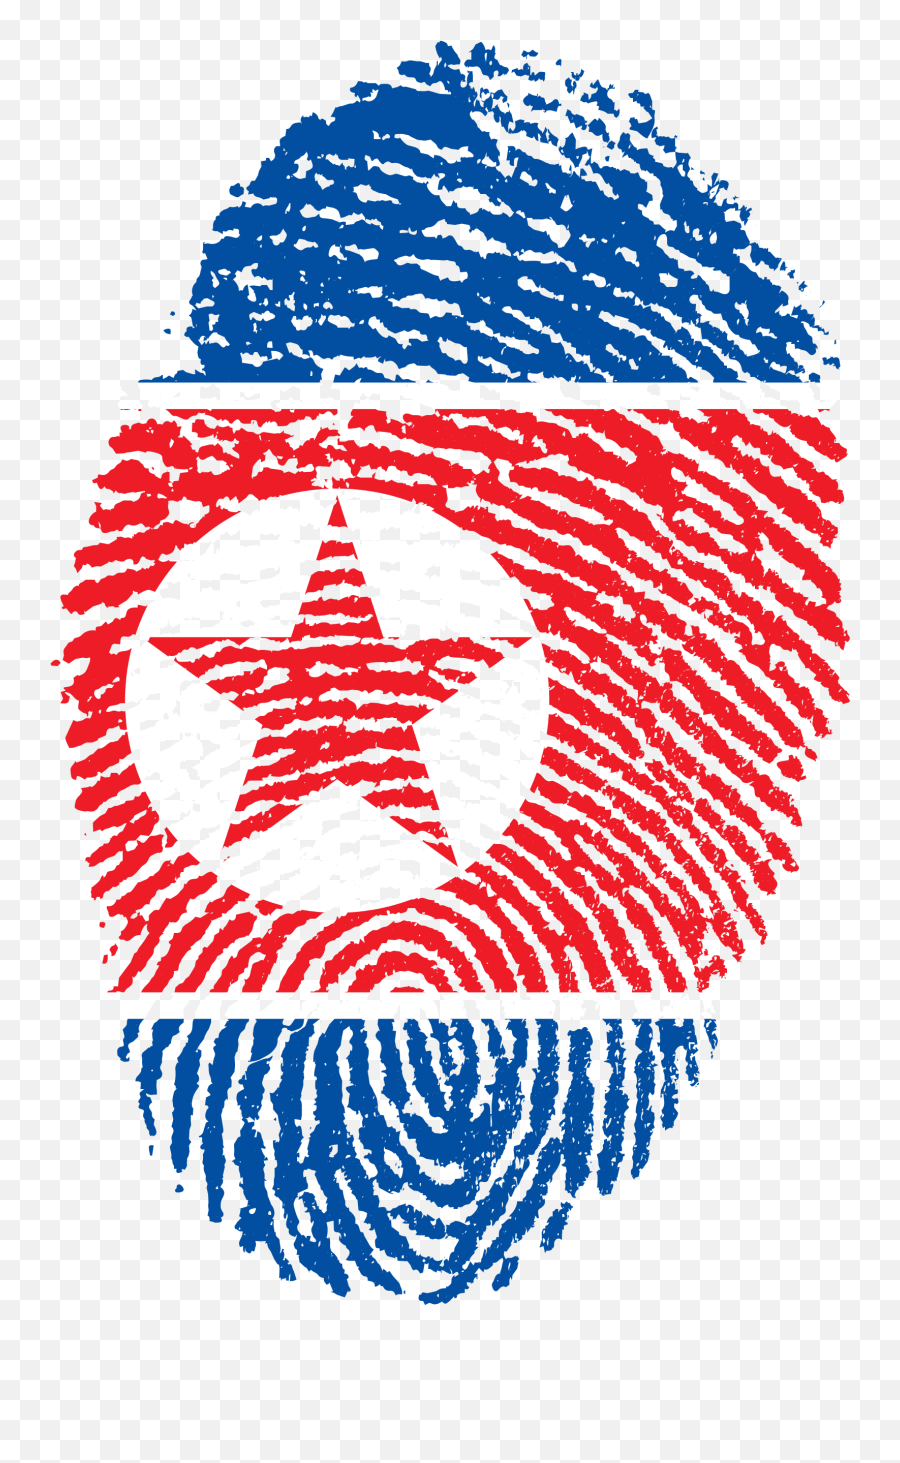 Snappygoatcom - Free Public Domain Images Snappygoatcom Curacao Flag Emoji,Korean Flag Png